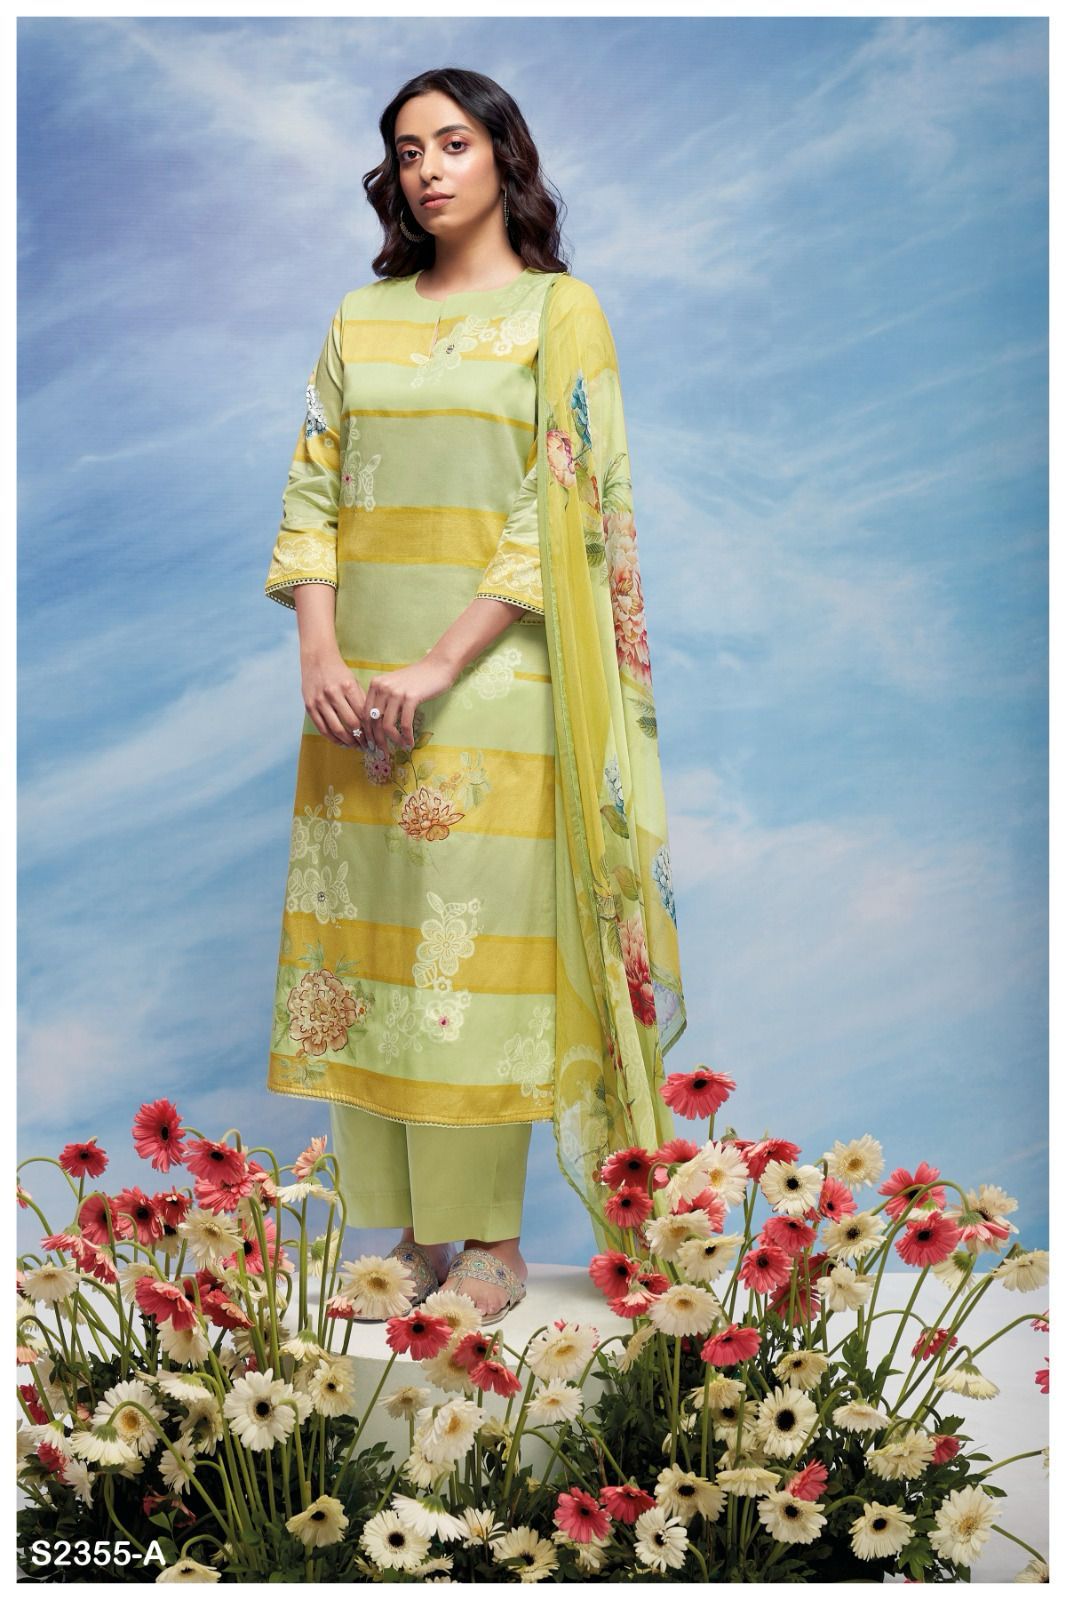 Teagan 2355 Ganga Cotton Silk Plazzo Style Suits